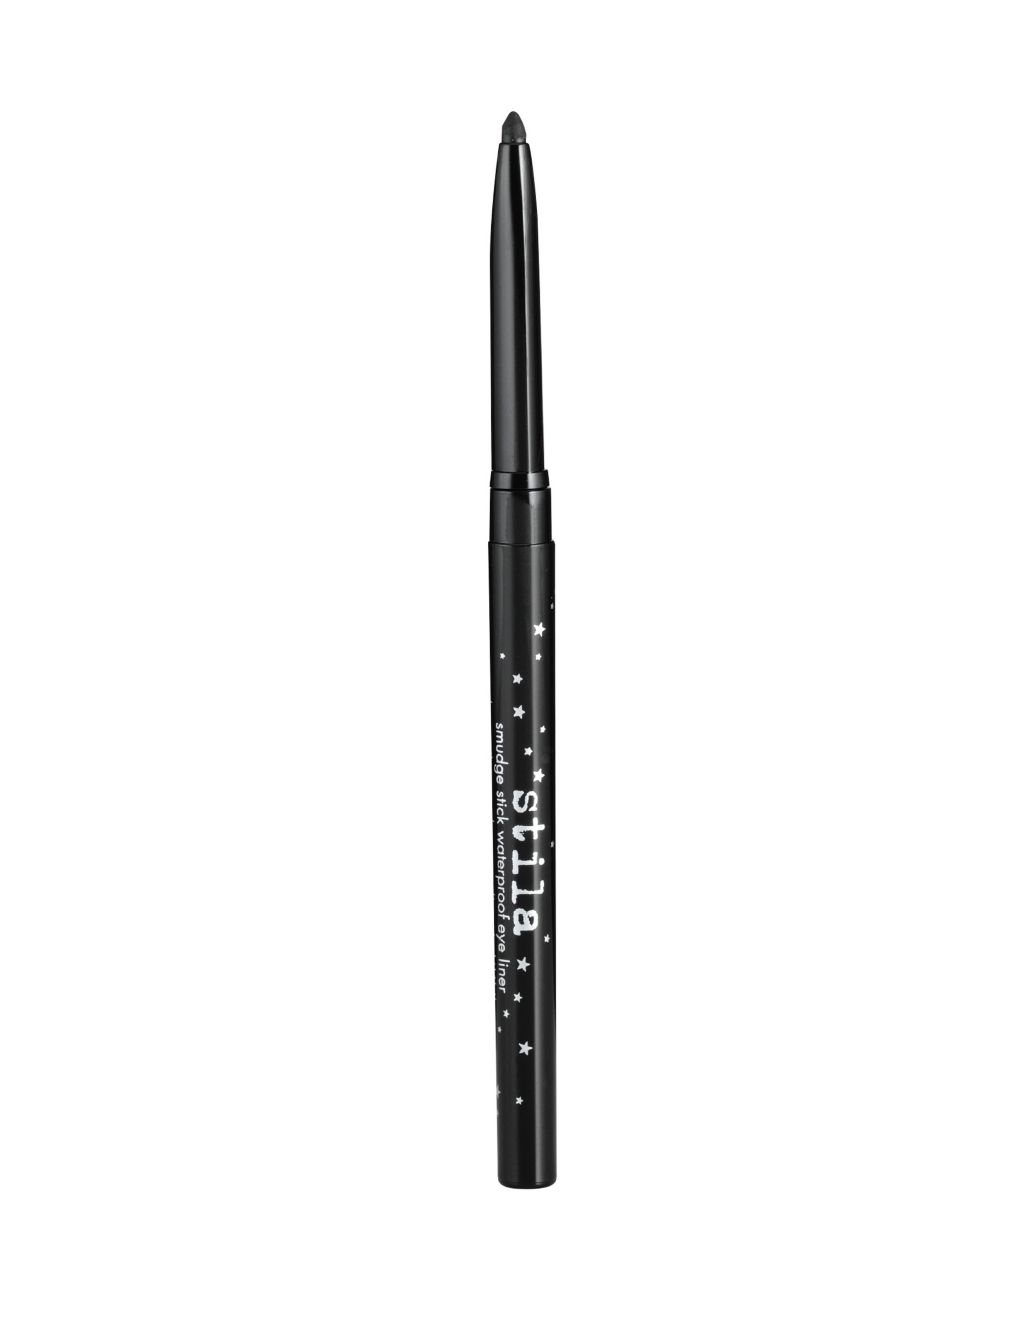 Smudge Stick Waterproof Eyeliner 0.3g